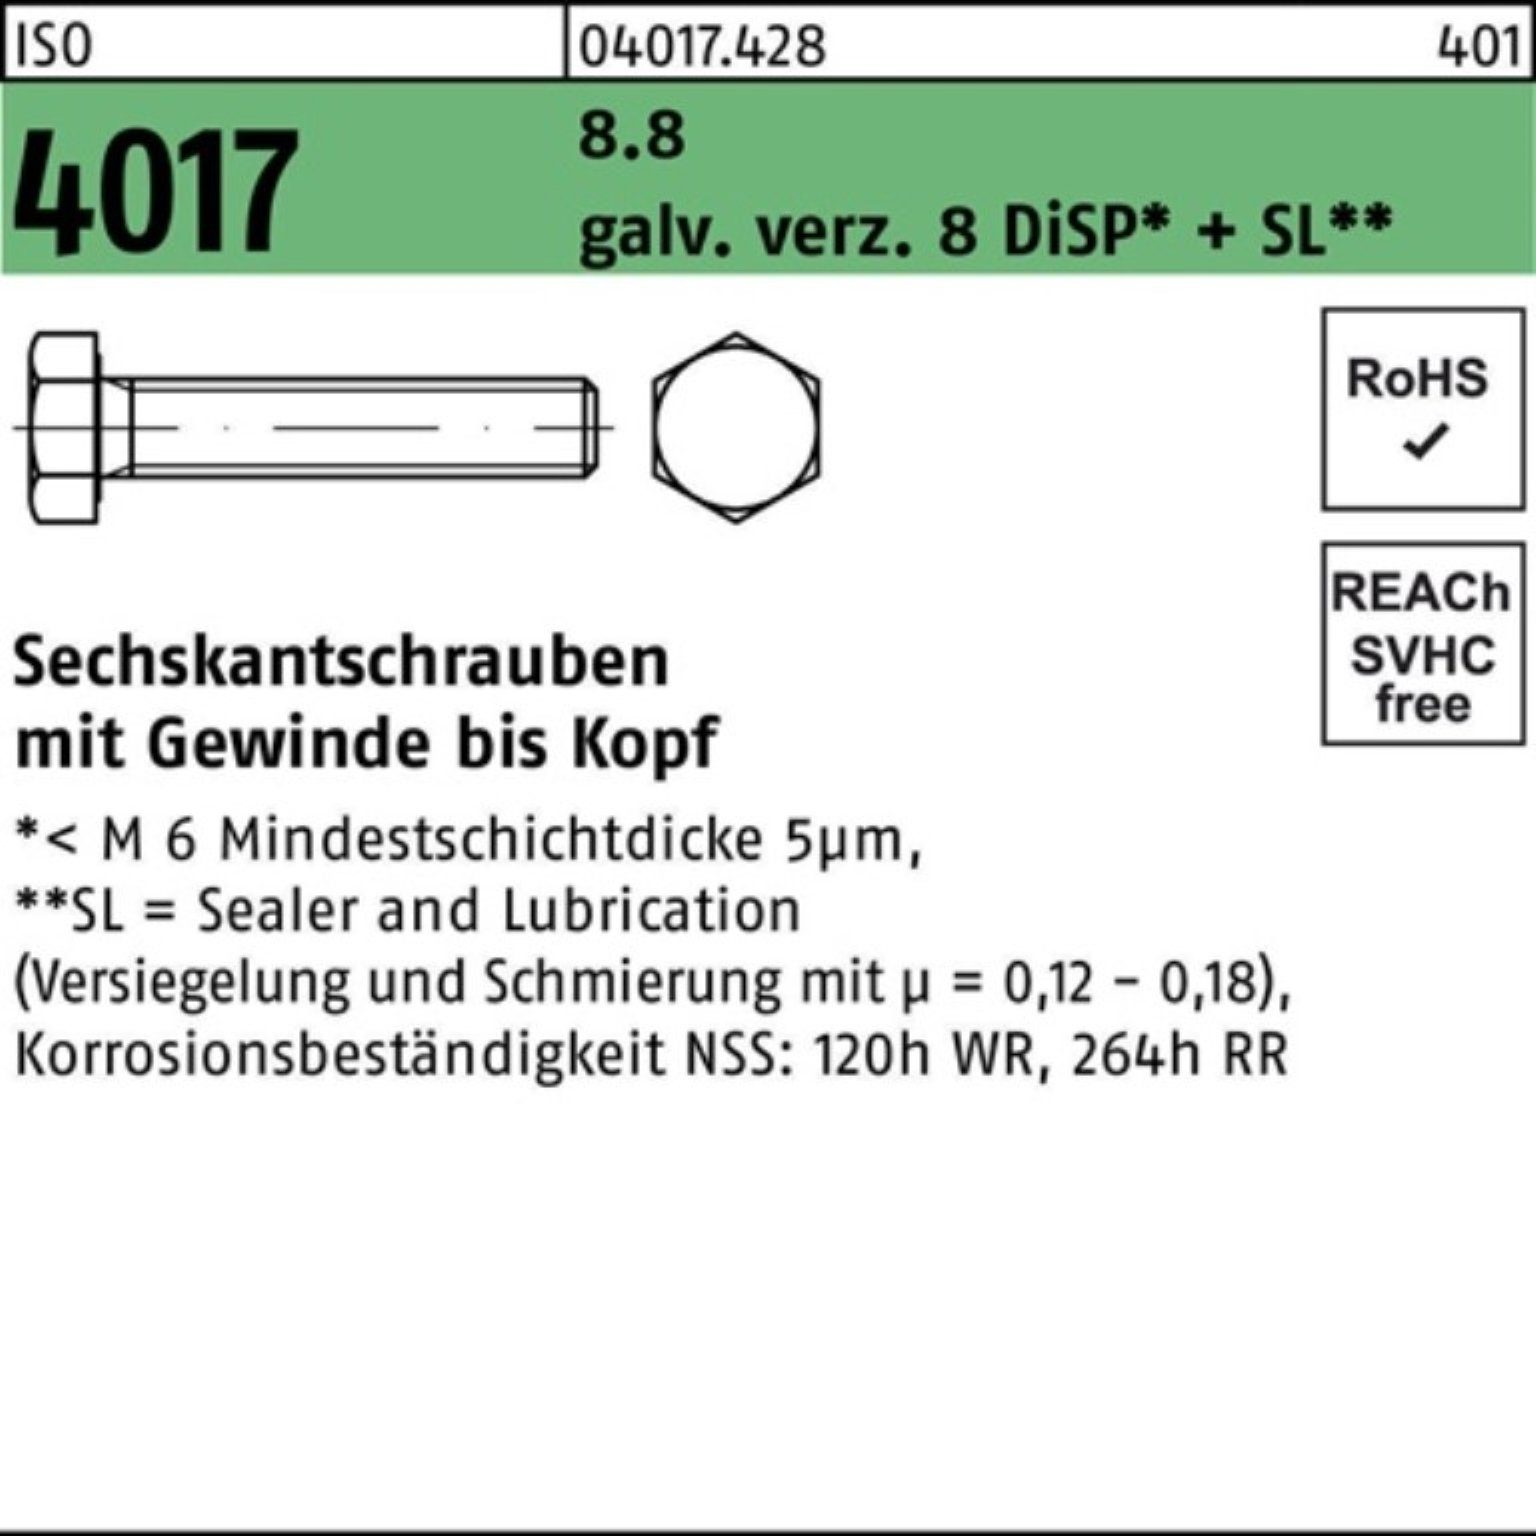 Pack 8 150 VG ISO DiS Sechskantschraube Bufab M20x 4017 Sechskantschraube galv.verz. 8.8 100er